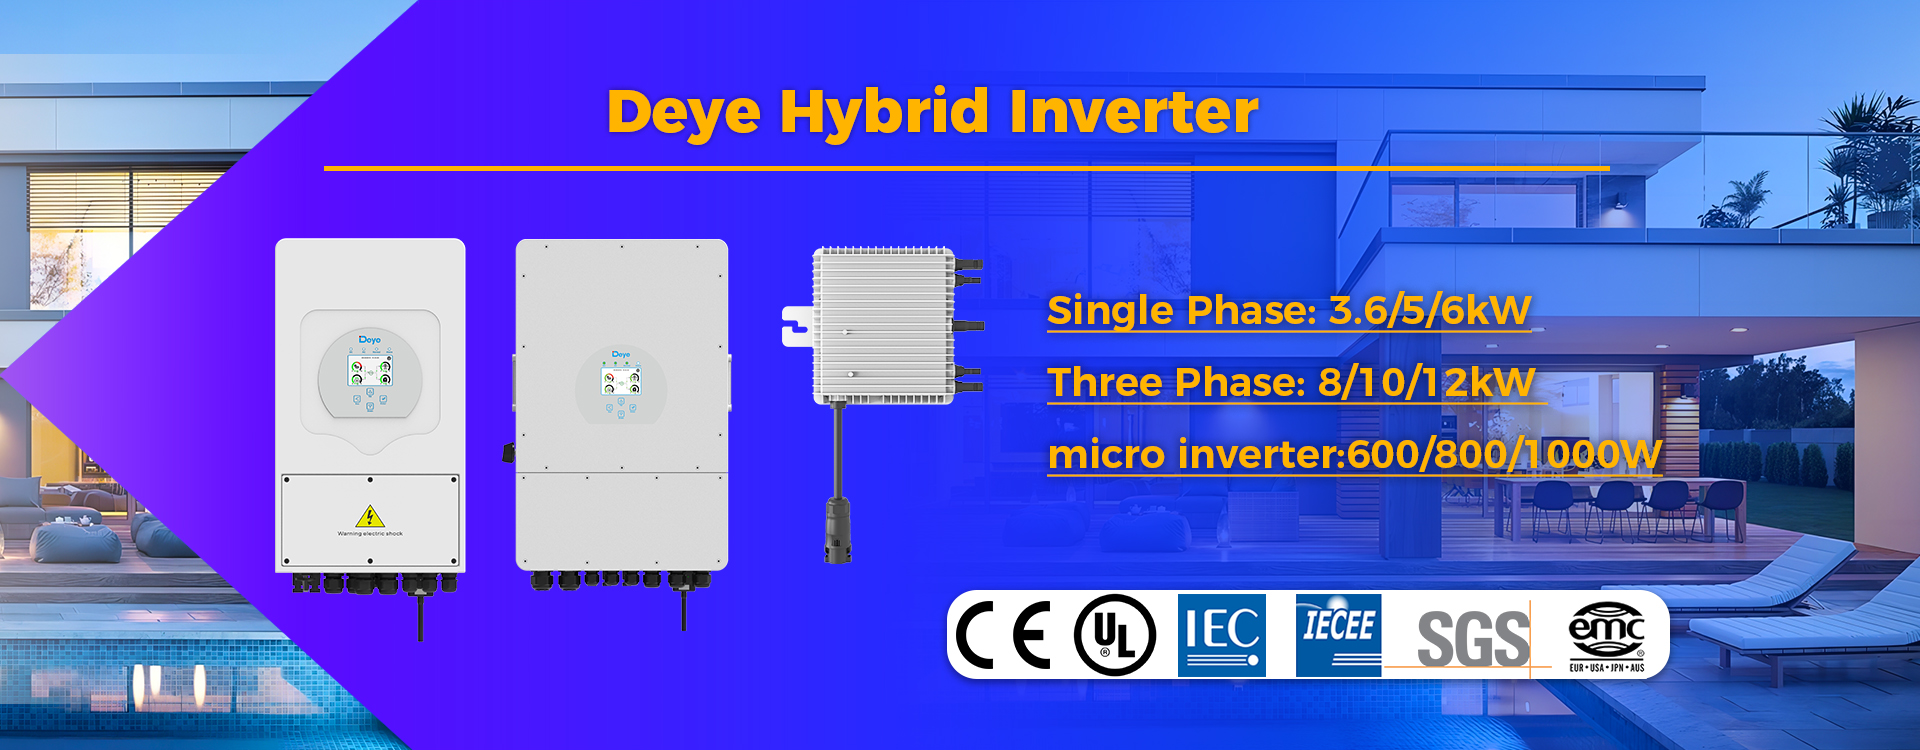 deye hybrid varyateur microinverter